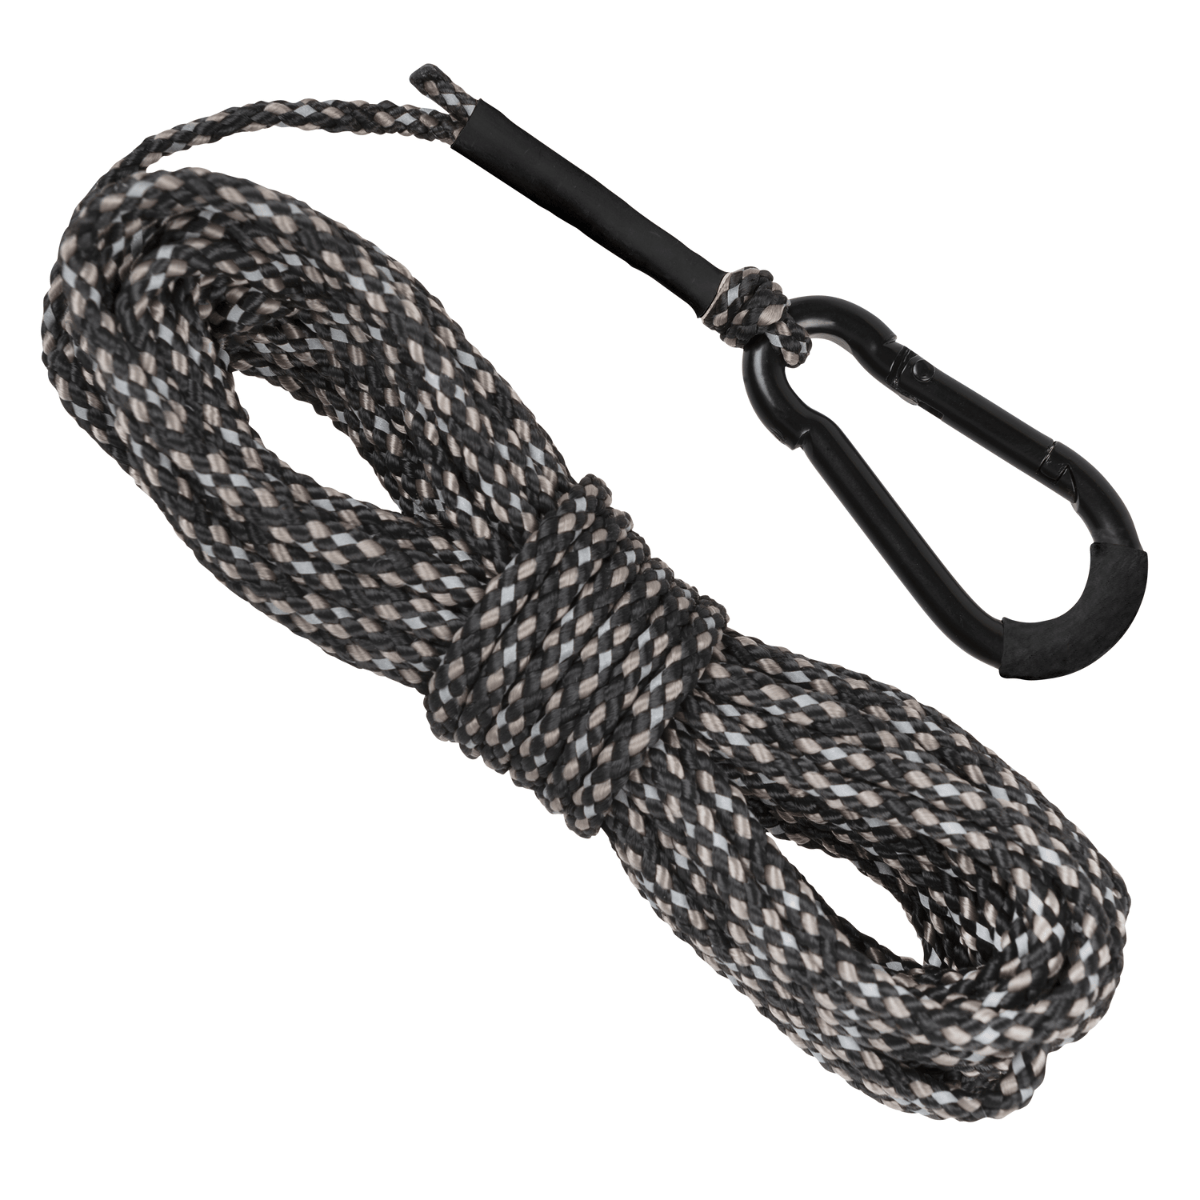 Allen 7248 Reflective Hoist Rope Black 25' Long